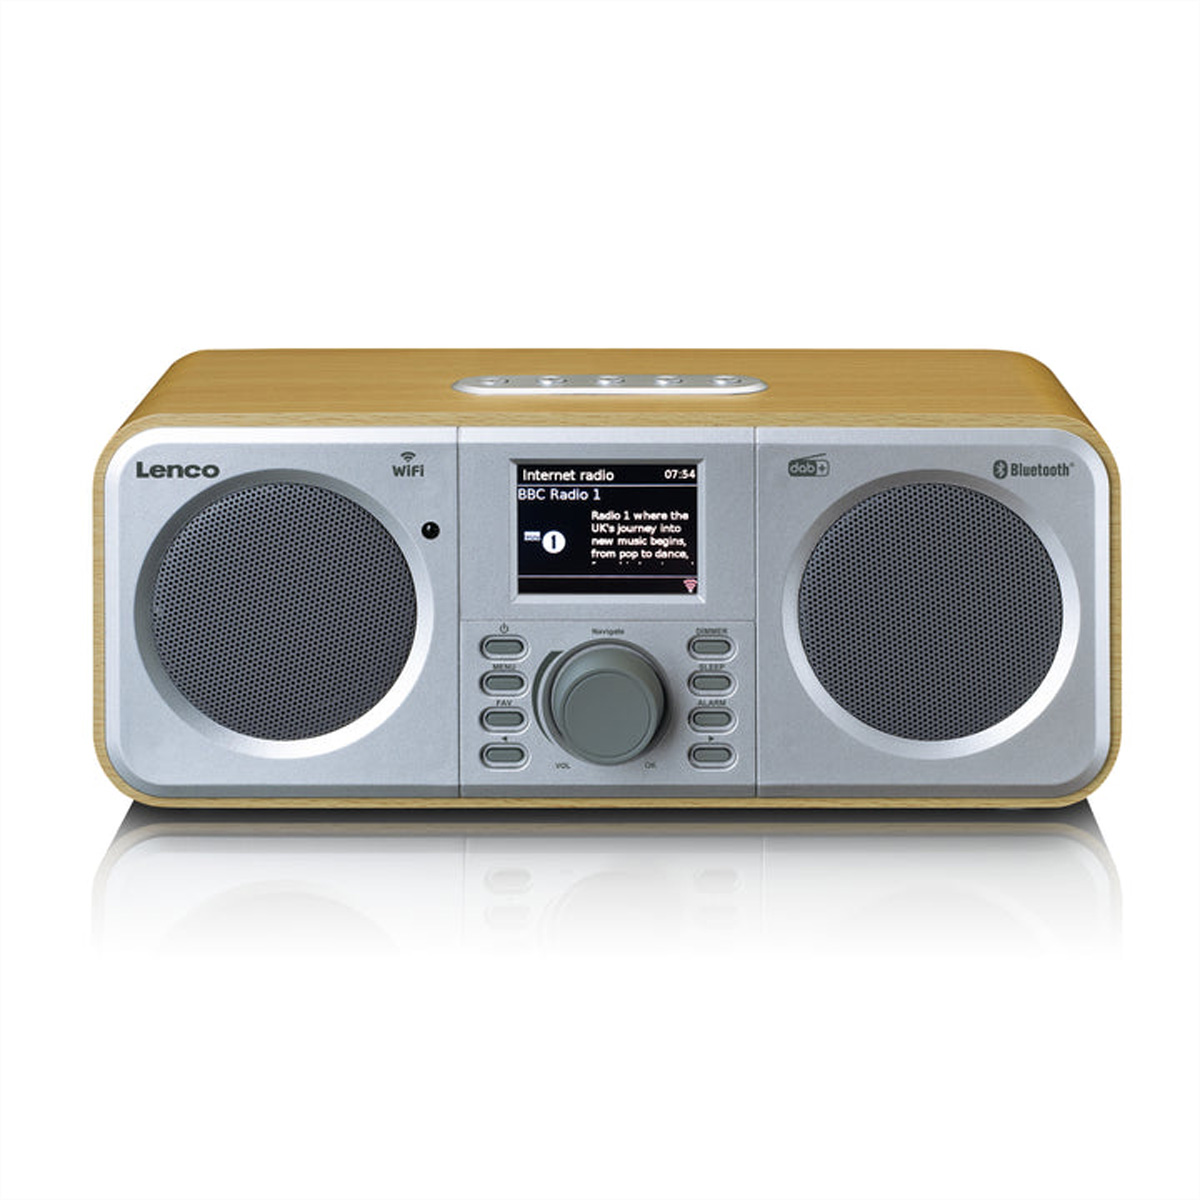 Lenco smart Radio DIR-141WD holzfarbe, BT, Spotify, 2x5w